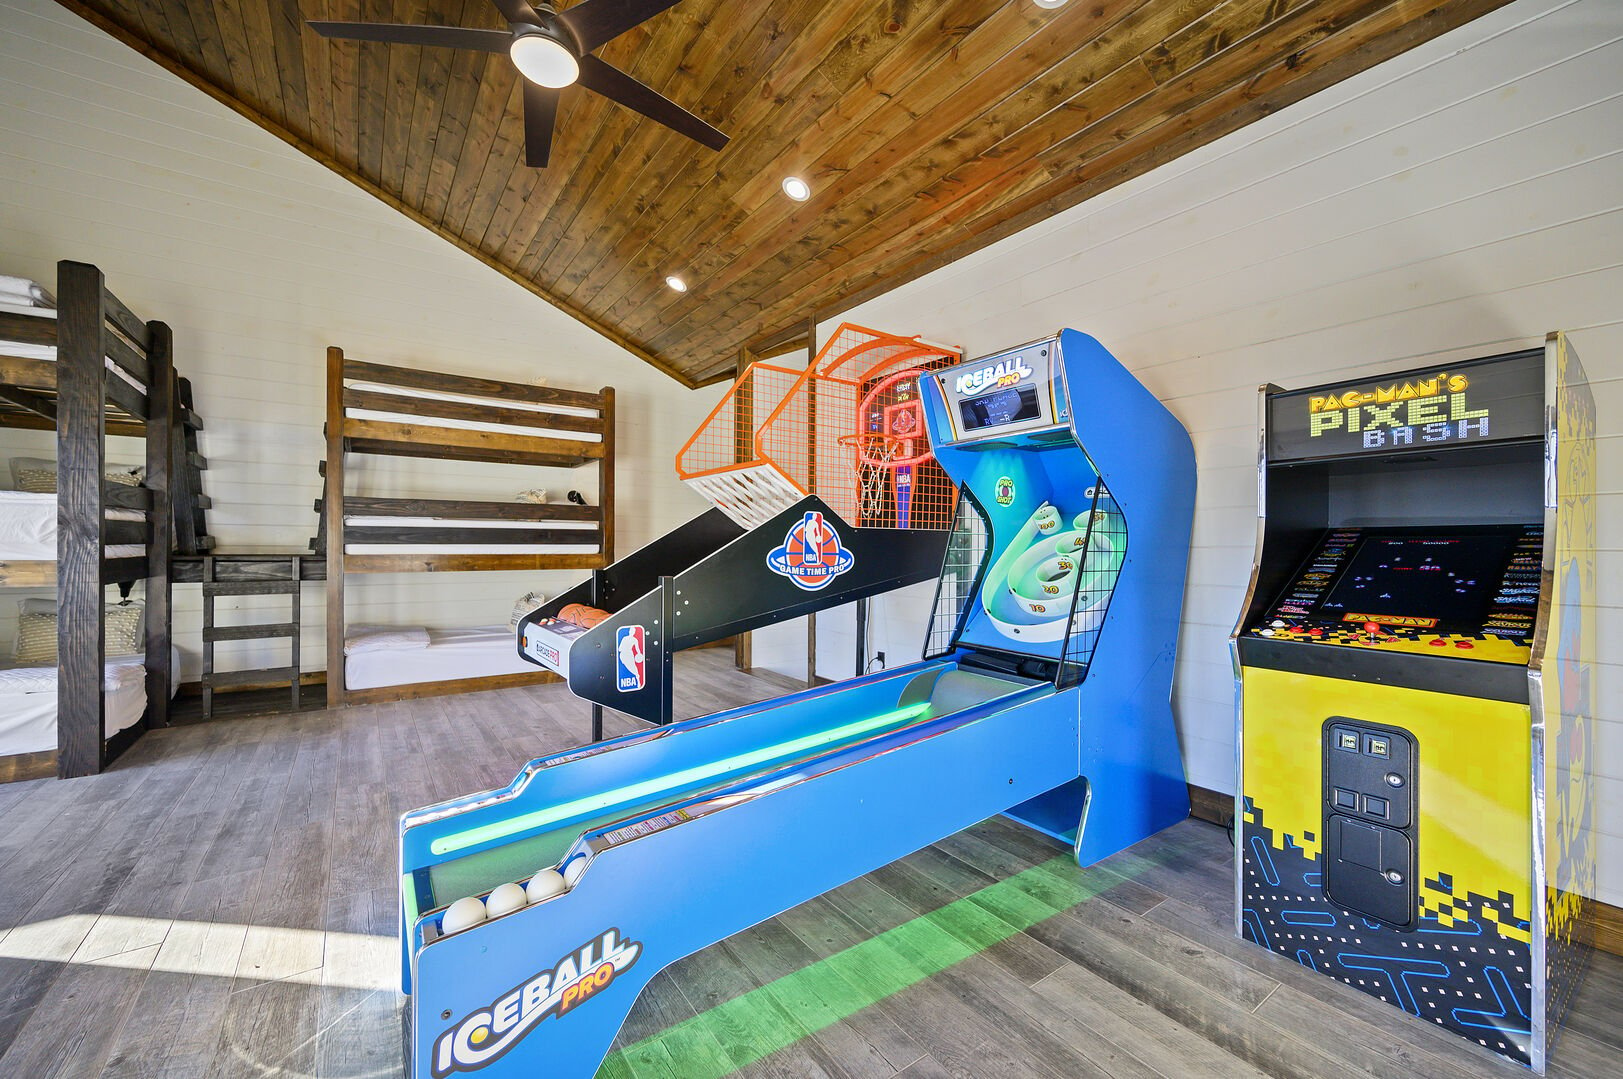 Game room includes a 6 bunk, basketball, ski ball, and arcade games